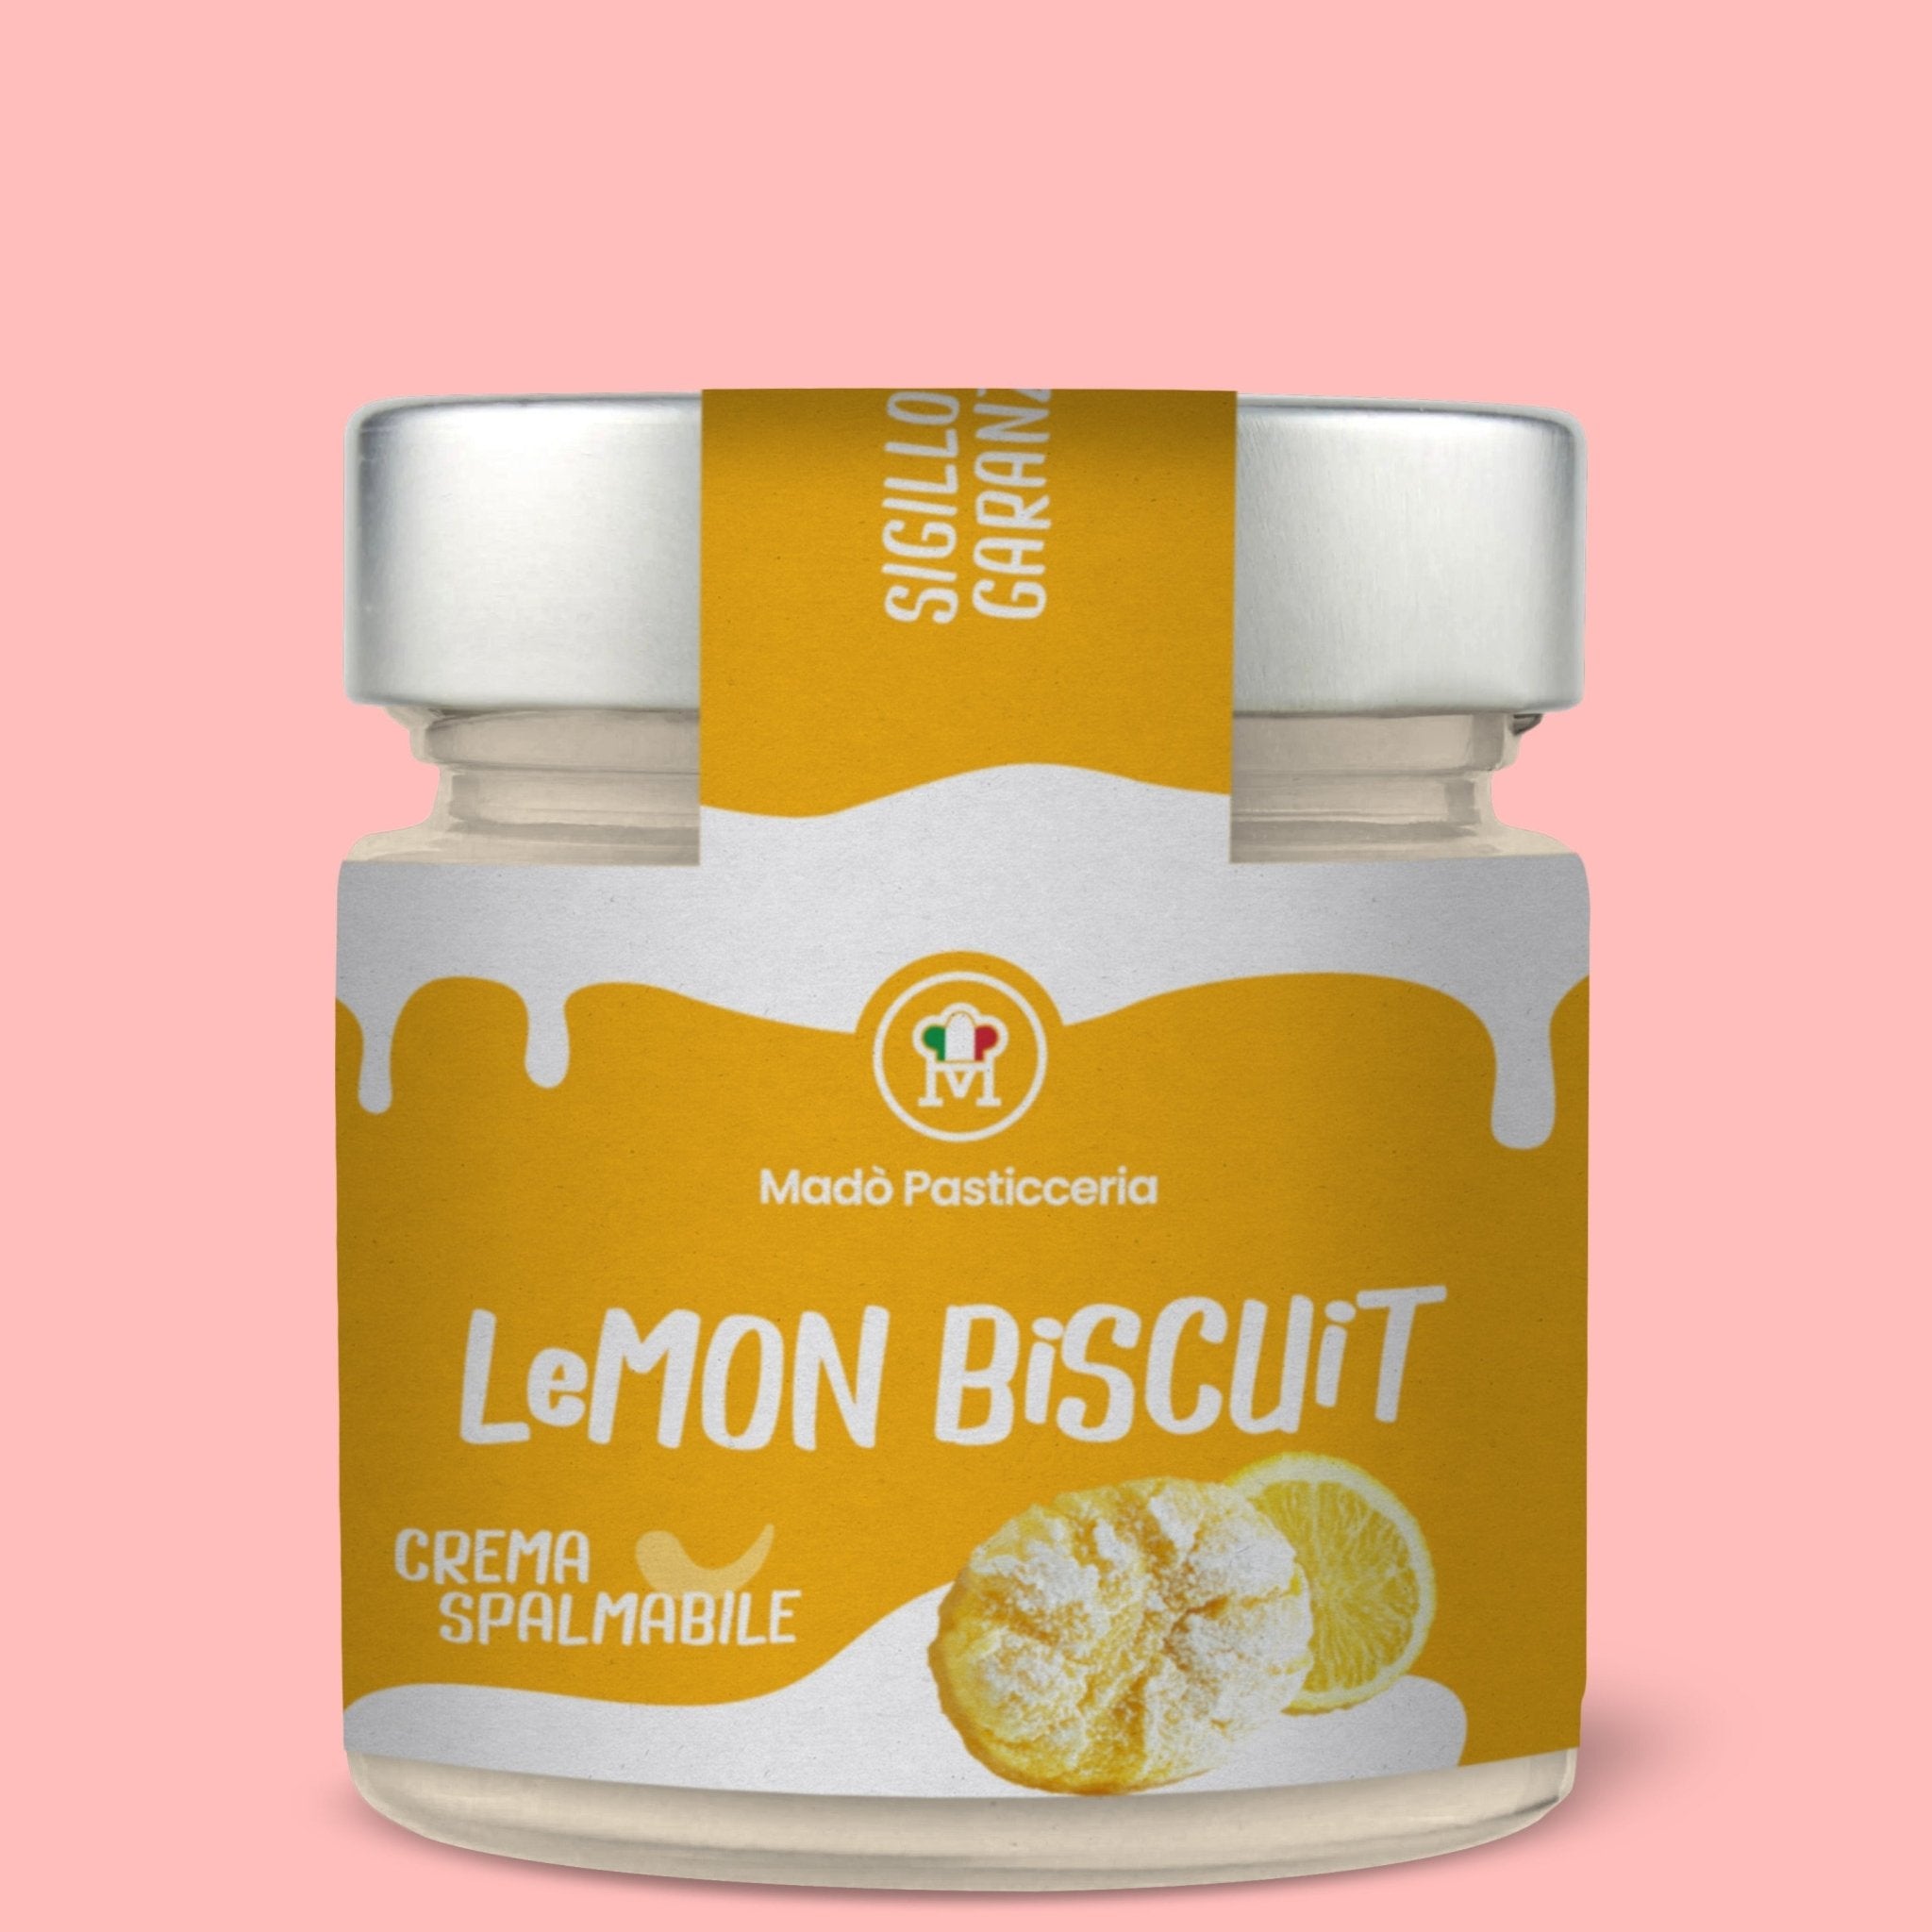 Crema spalmabile "Lemon biscuit" - Madò Pasticceria